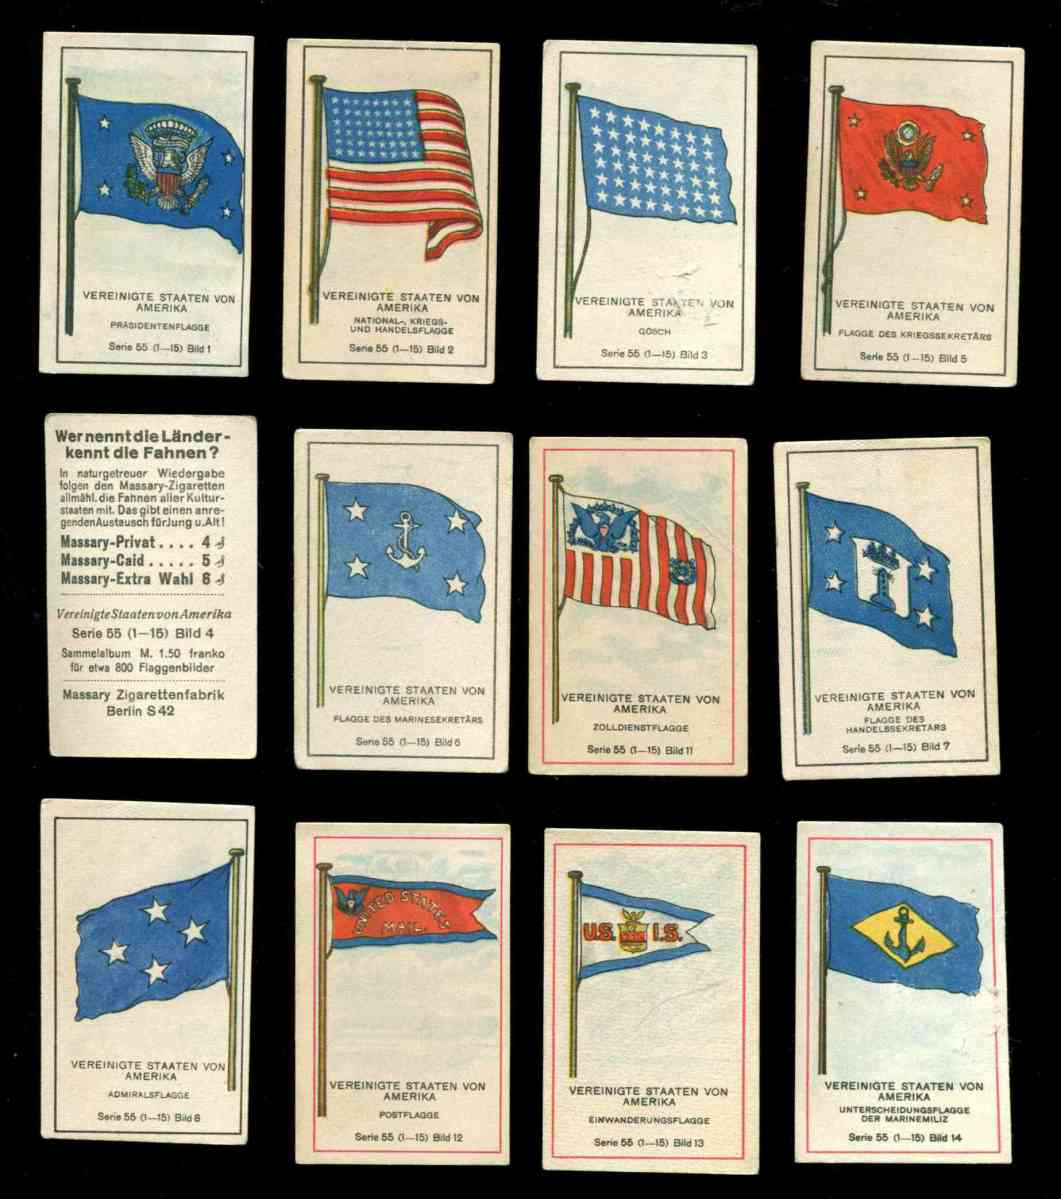 1929 Massary Zigarettenfabrik FLAG cards - AMERICA - Lot (12) different n cards value